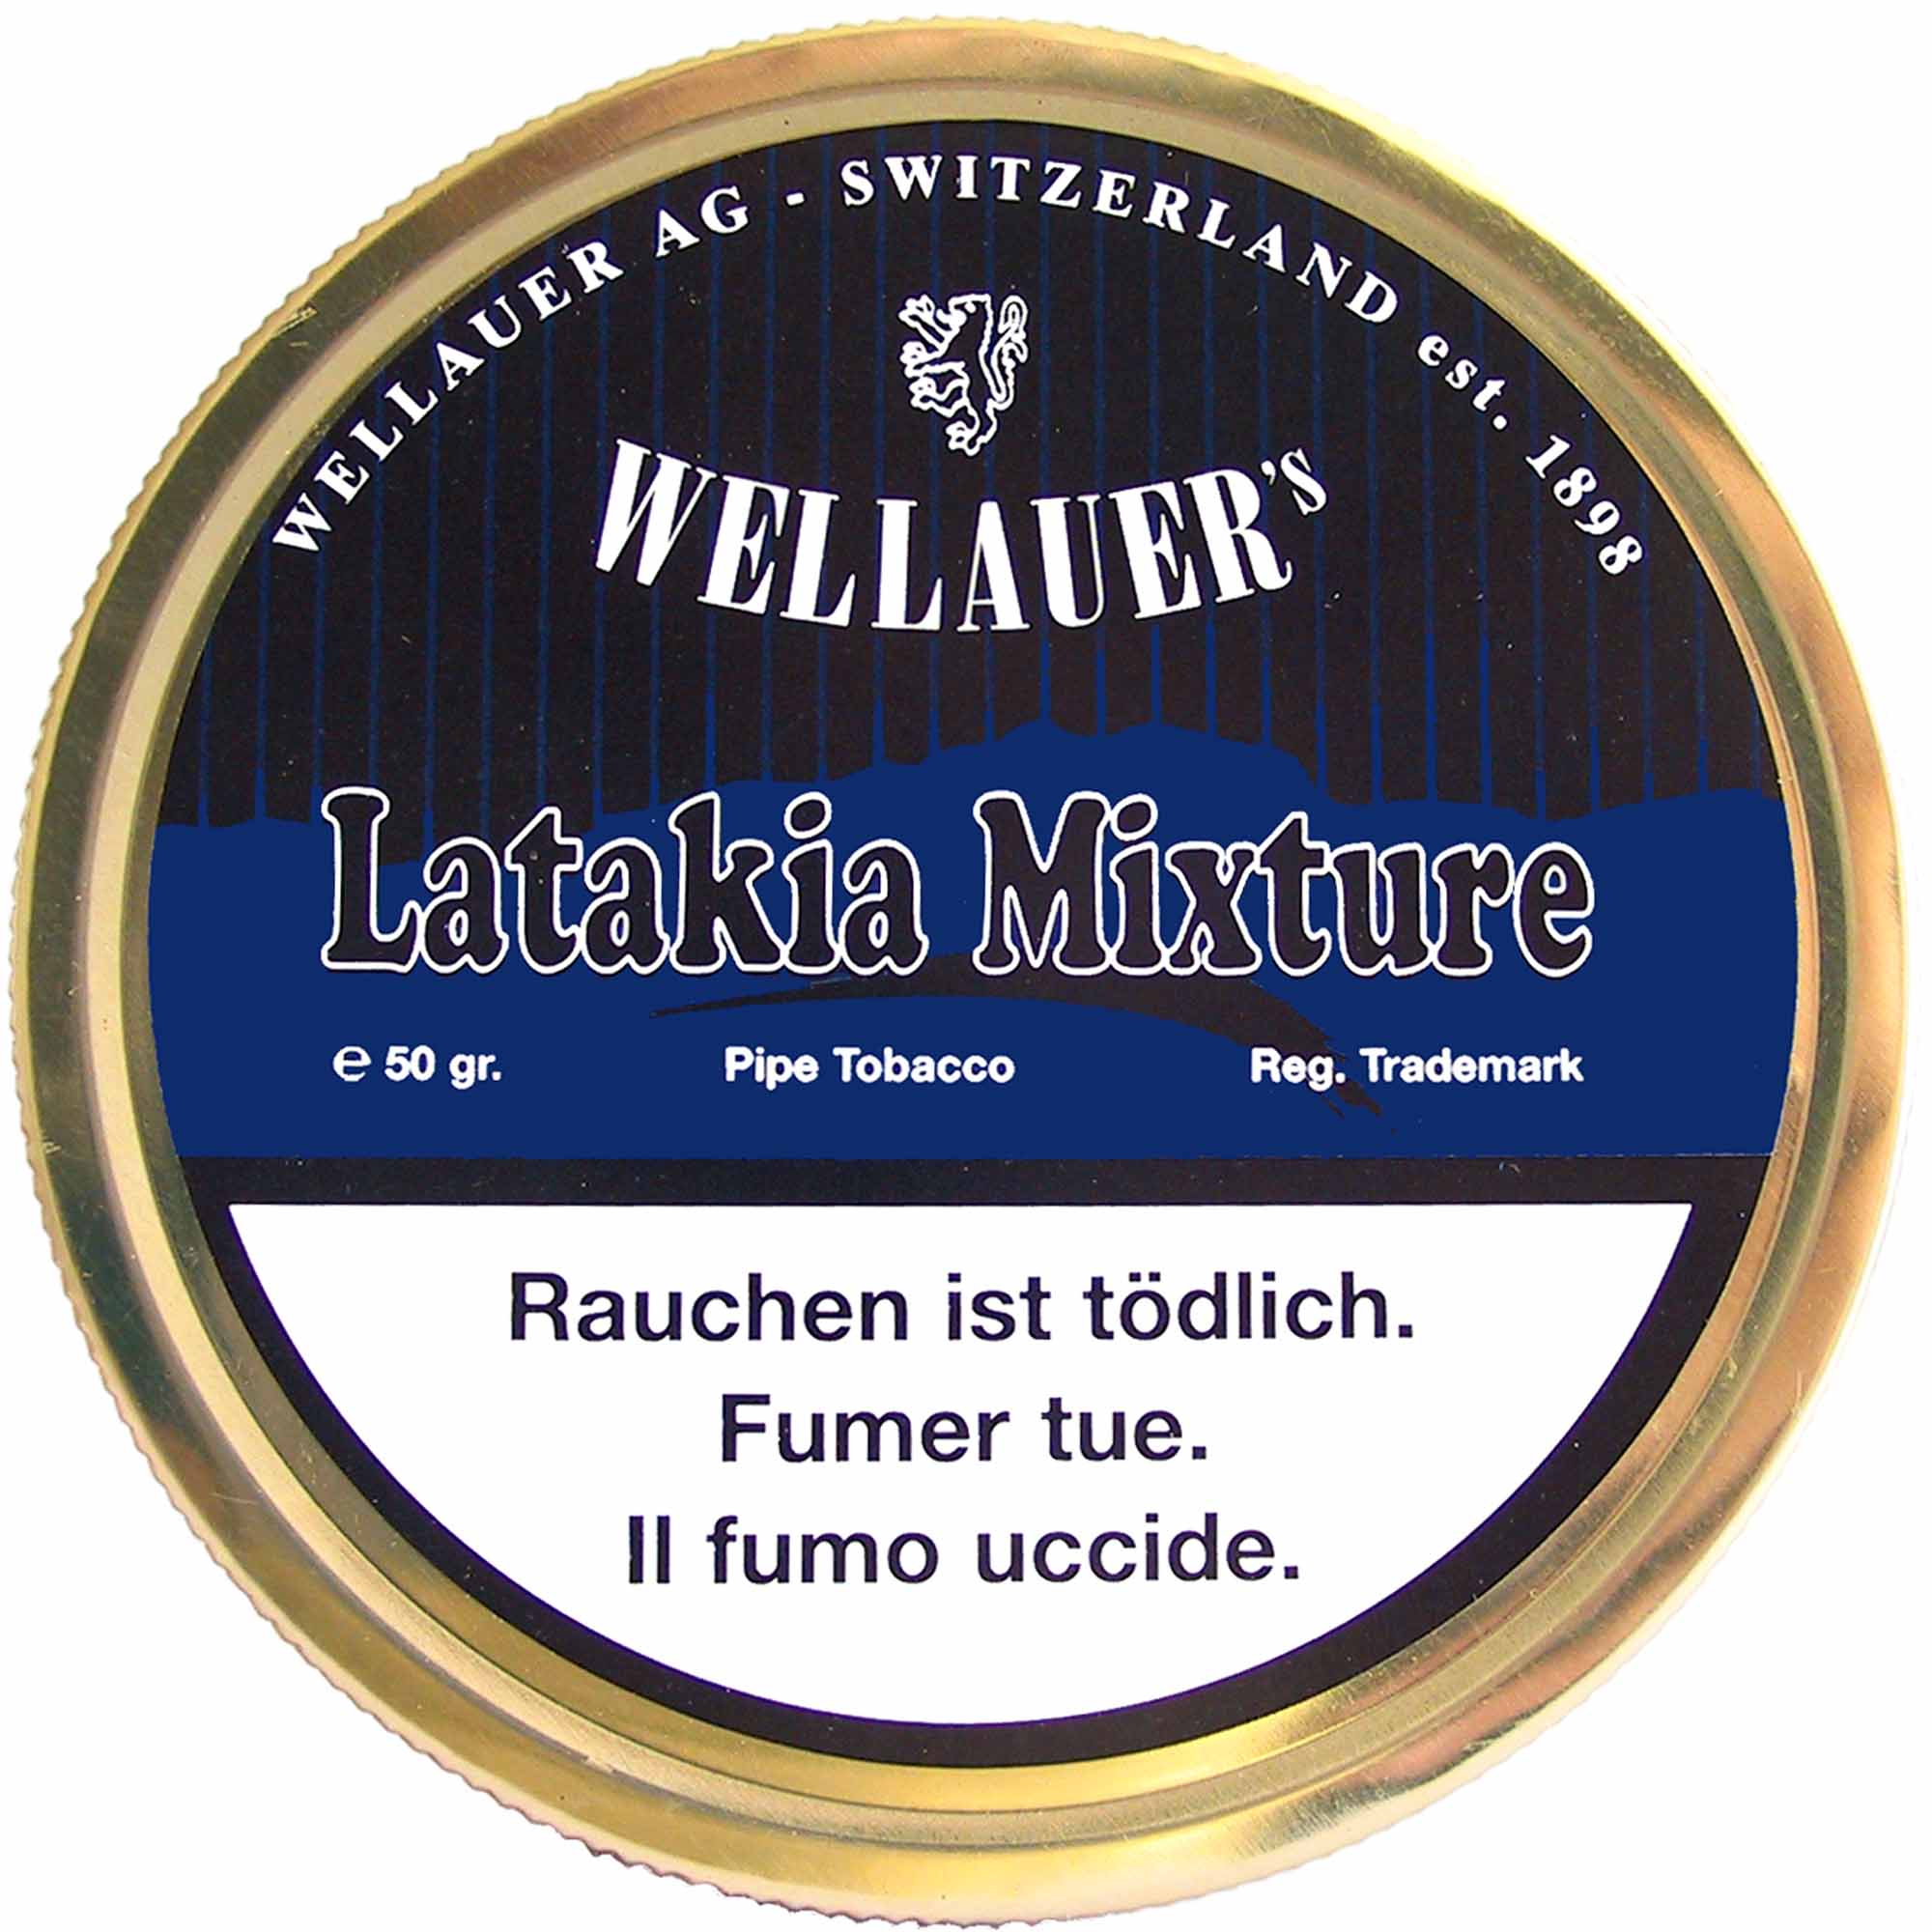 Wellauer's Pfeifentabak Latakia Mixture - 50g Tin